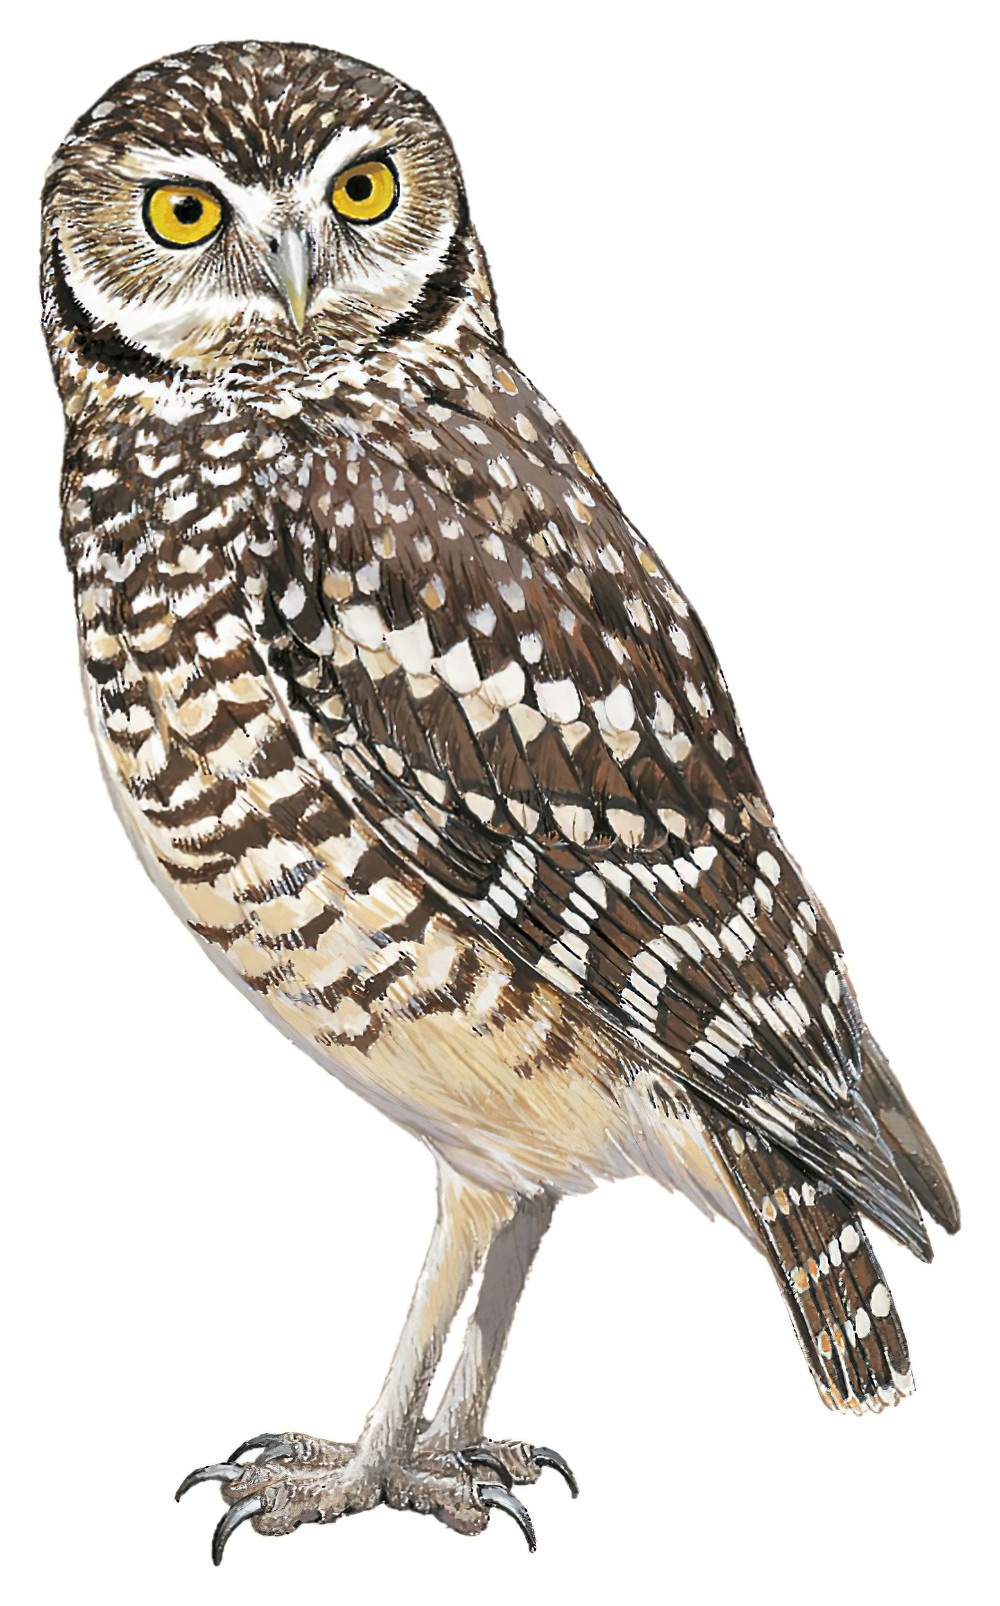 Burrowing Owl / Athene cunicularia